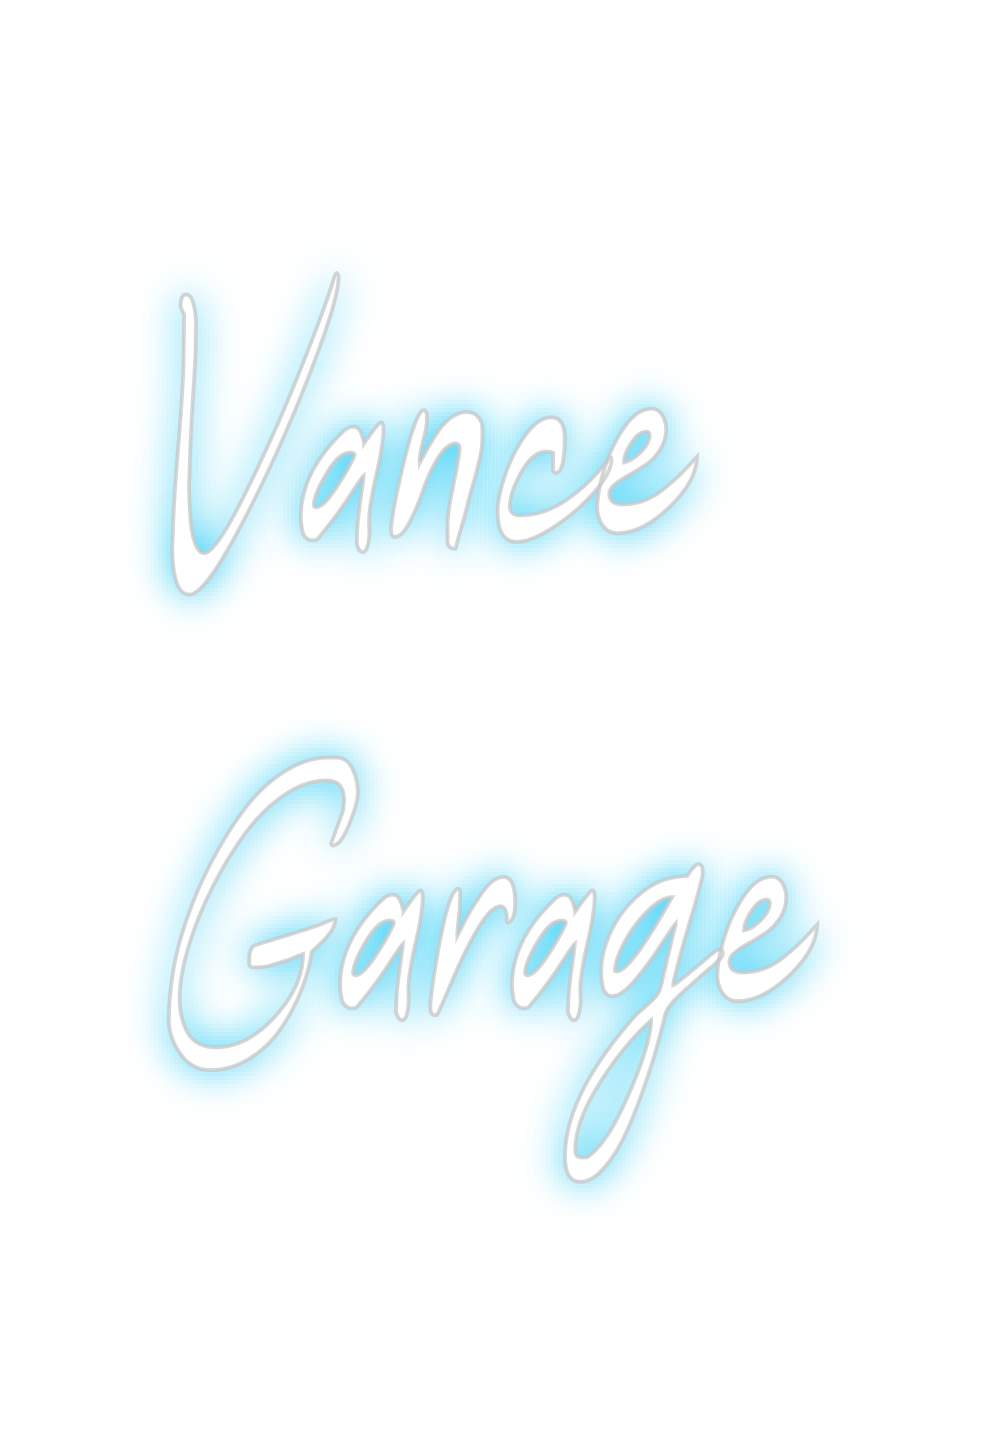 Product Order  Vance
Garage